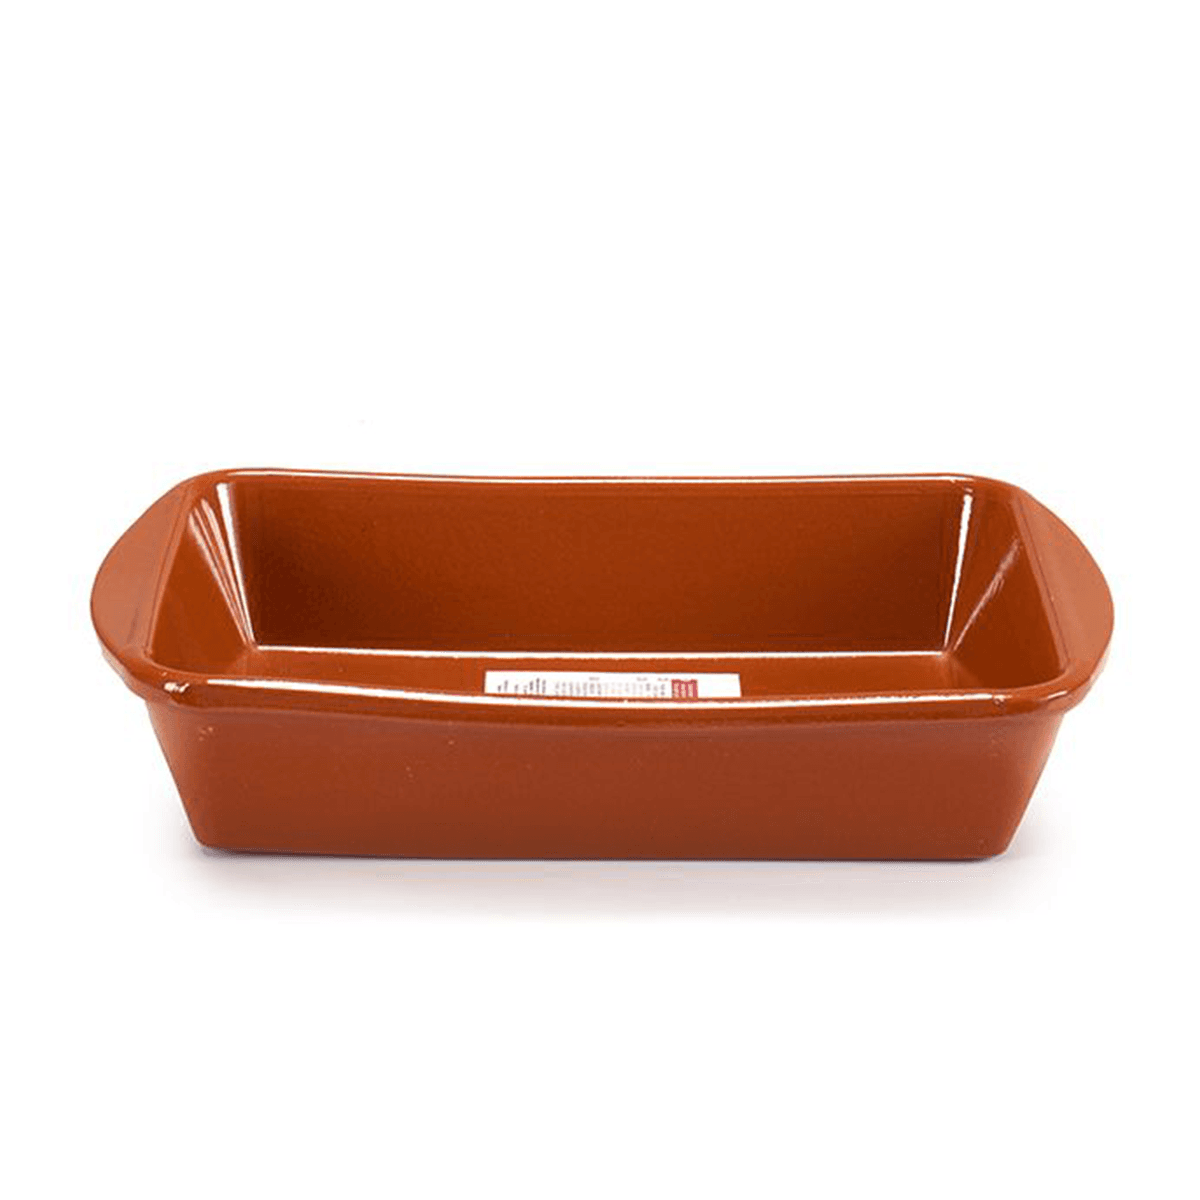 صحن فخار مستطيل عميق لون بني 26 سم من آرت ريجال صناعة اسبانيا Arte Regal Brown Clay Deep Rectangular Plate